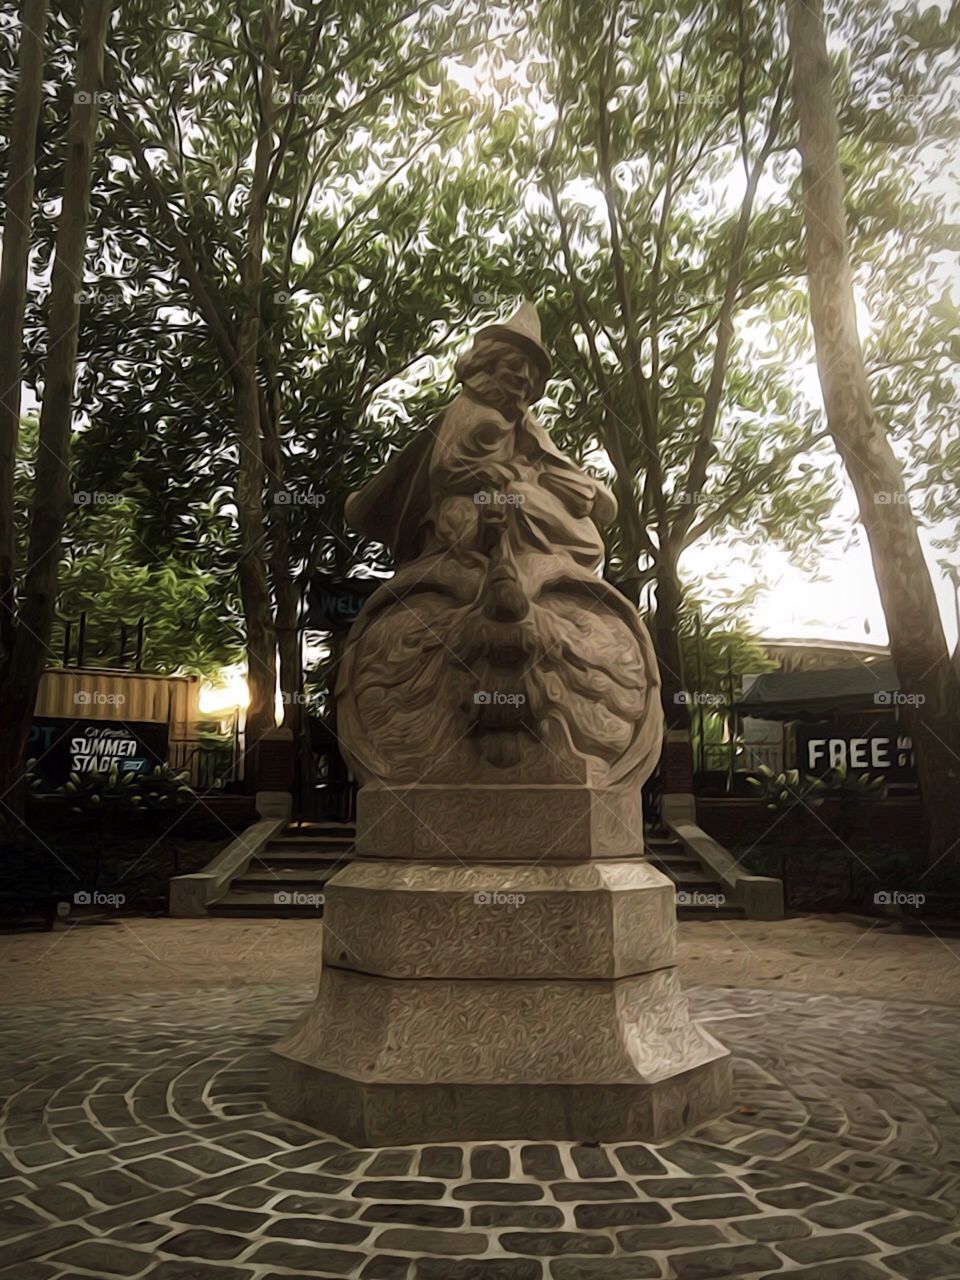 Mother Goose Sculpture, Central Park, New York City. Instagram @PennyPeronto